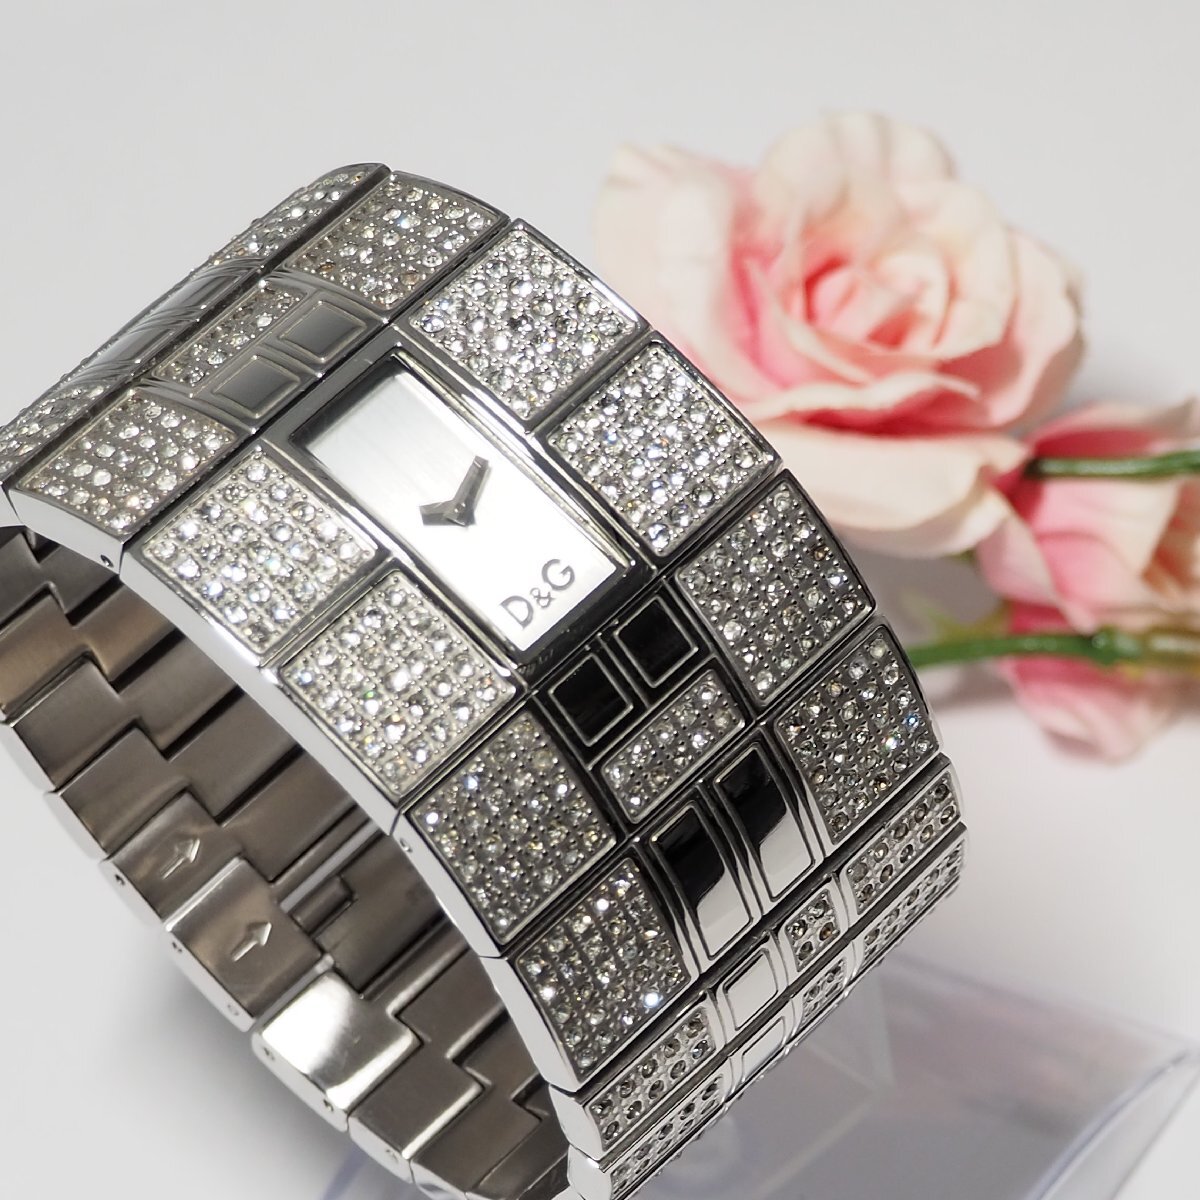  Dolce & Gabbana D&G Stone bangle watch wristwatch combination C446